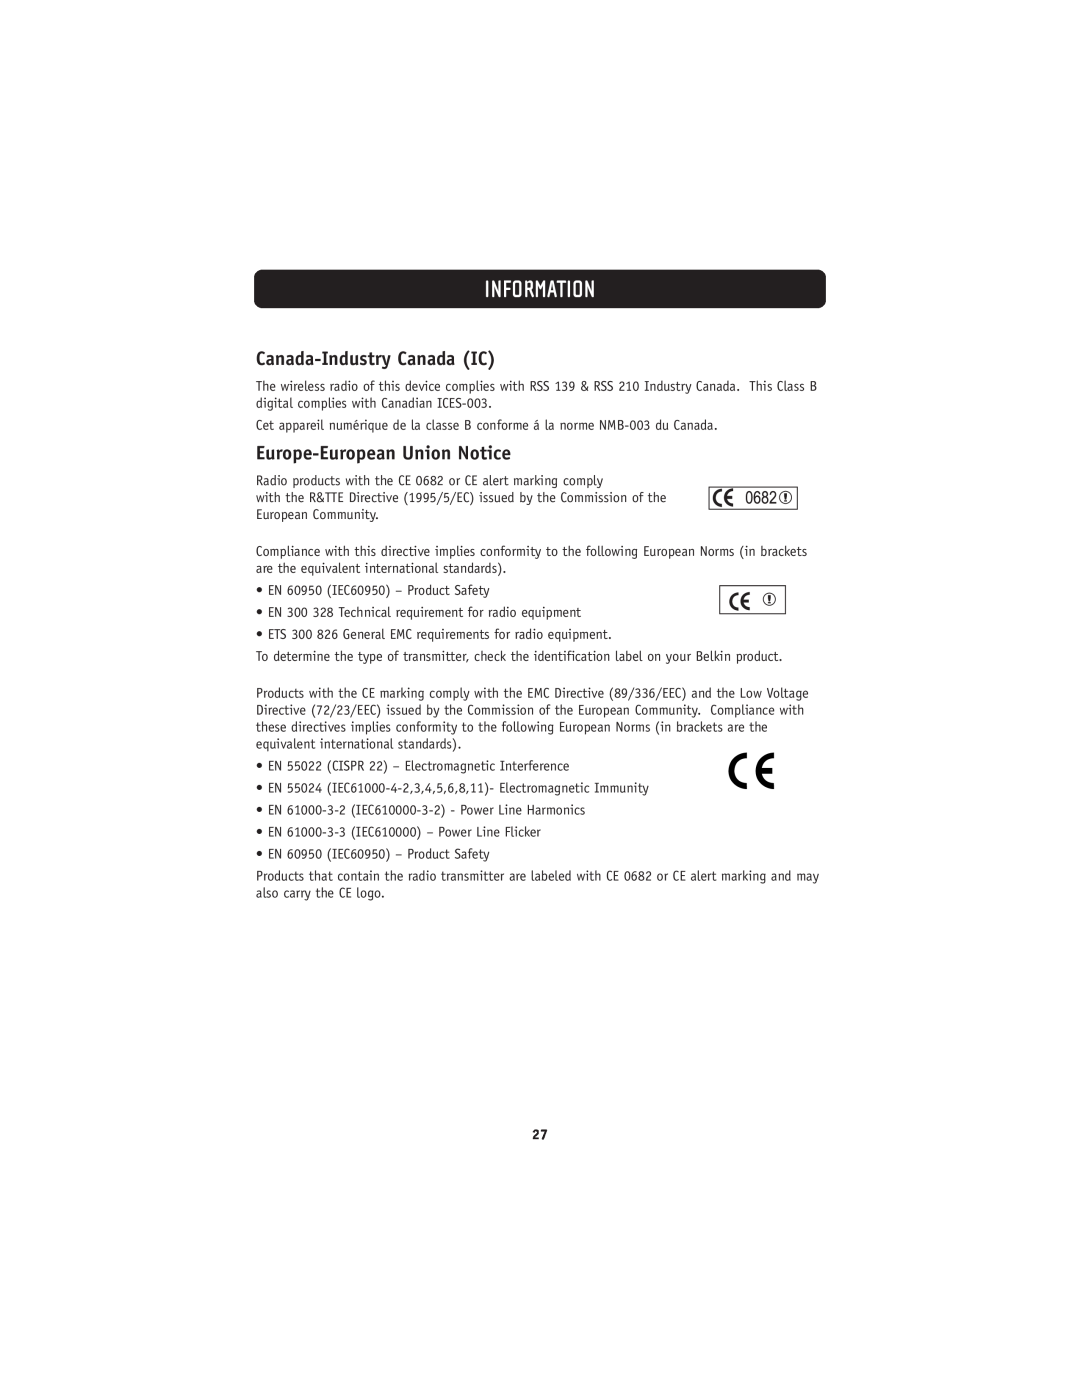 Belkin 802.11g manual Canada-Industry Canada IC, Europe-European Union Notice, Information 